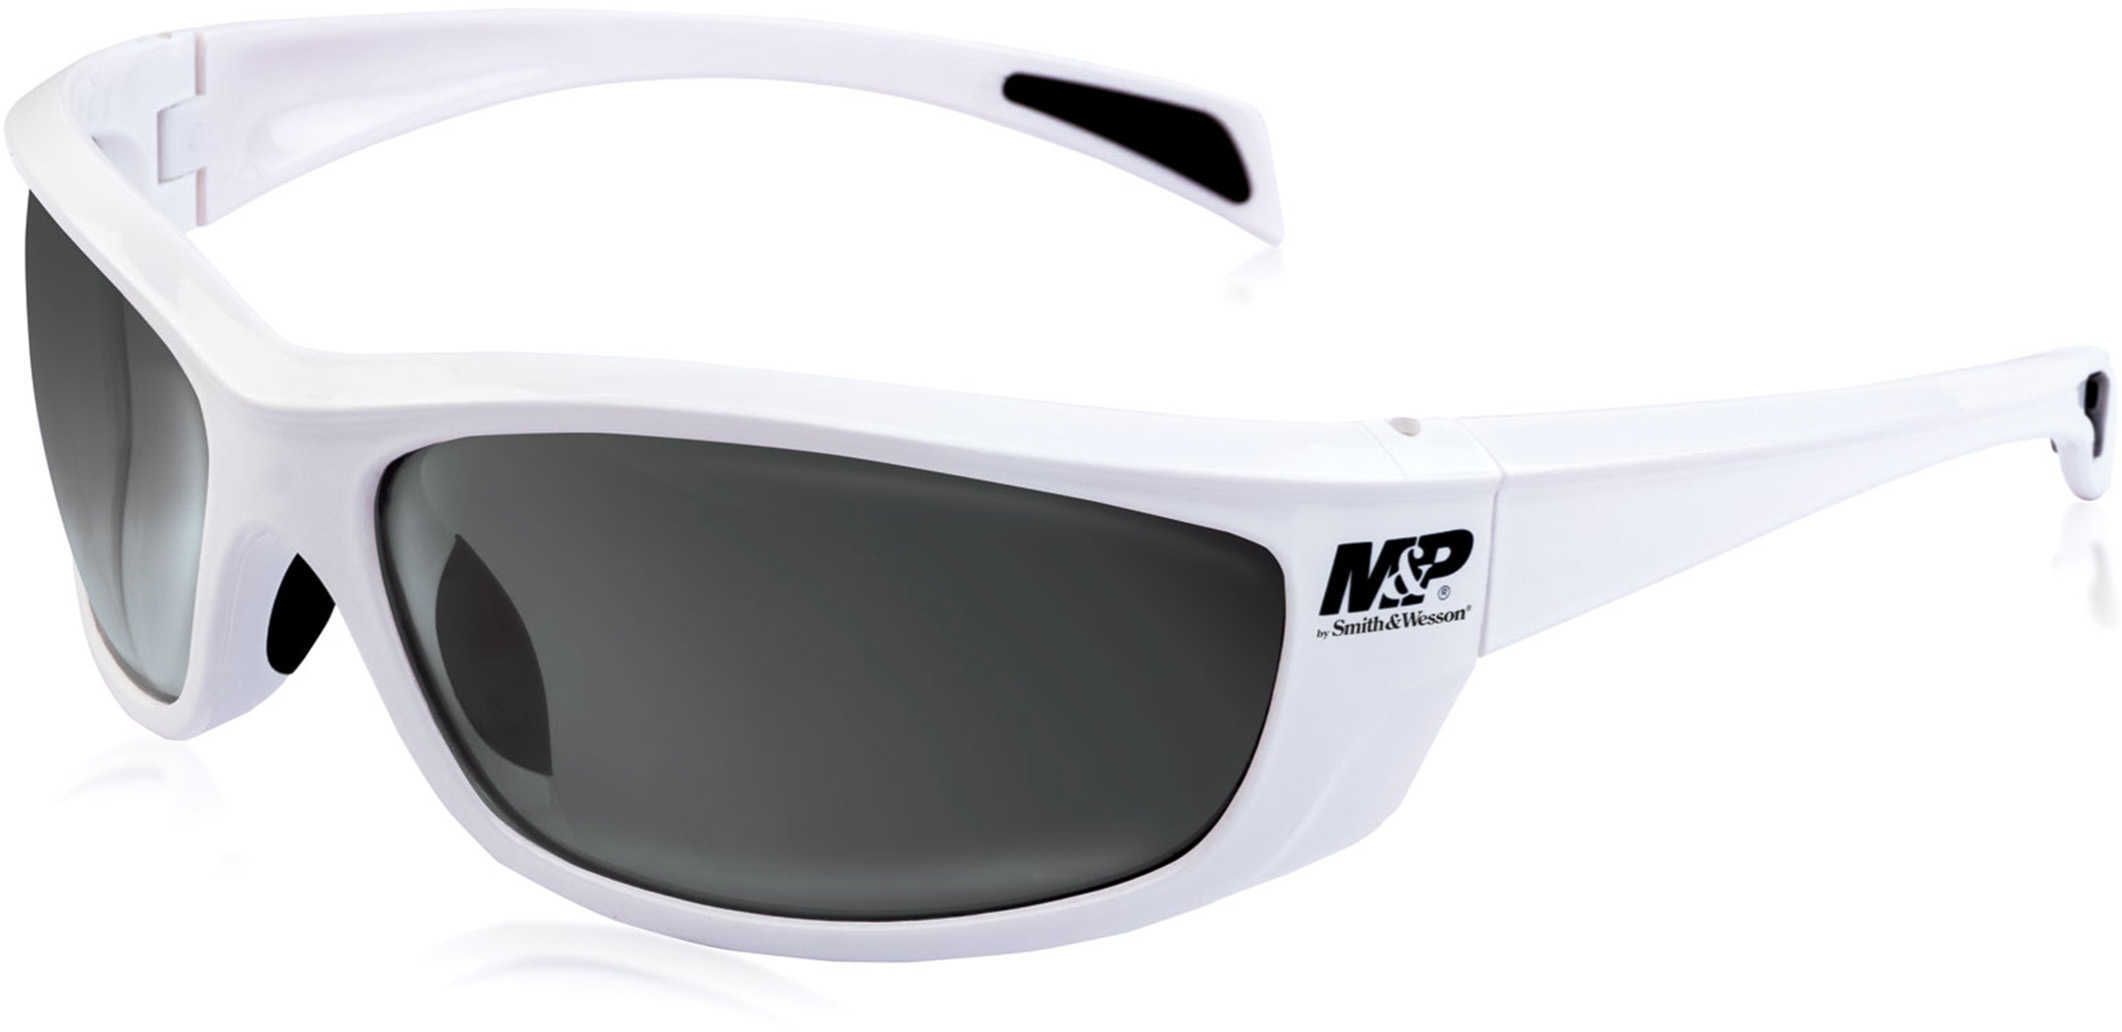 Smith & Wesson Accessories M&P Whitehawk Shooting Glasses Frames Smoke Mirror Lens Md: 110172